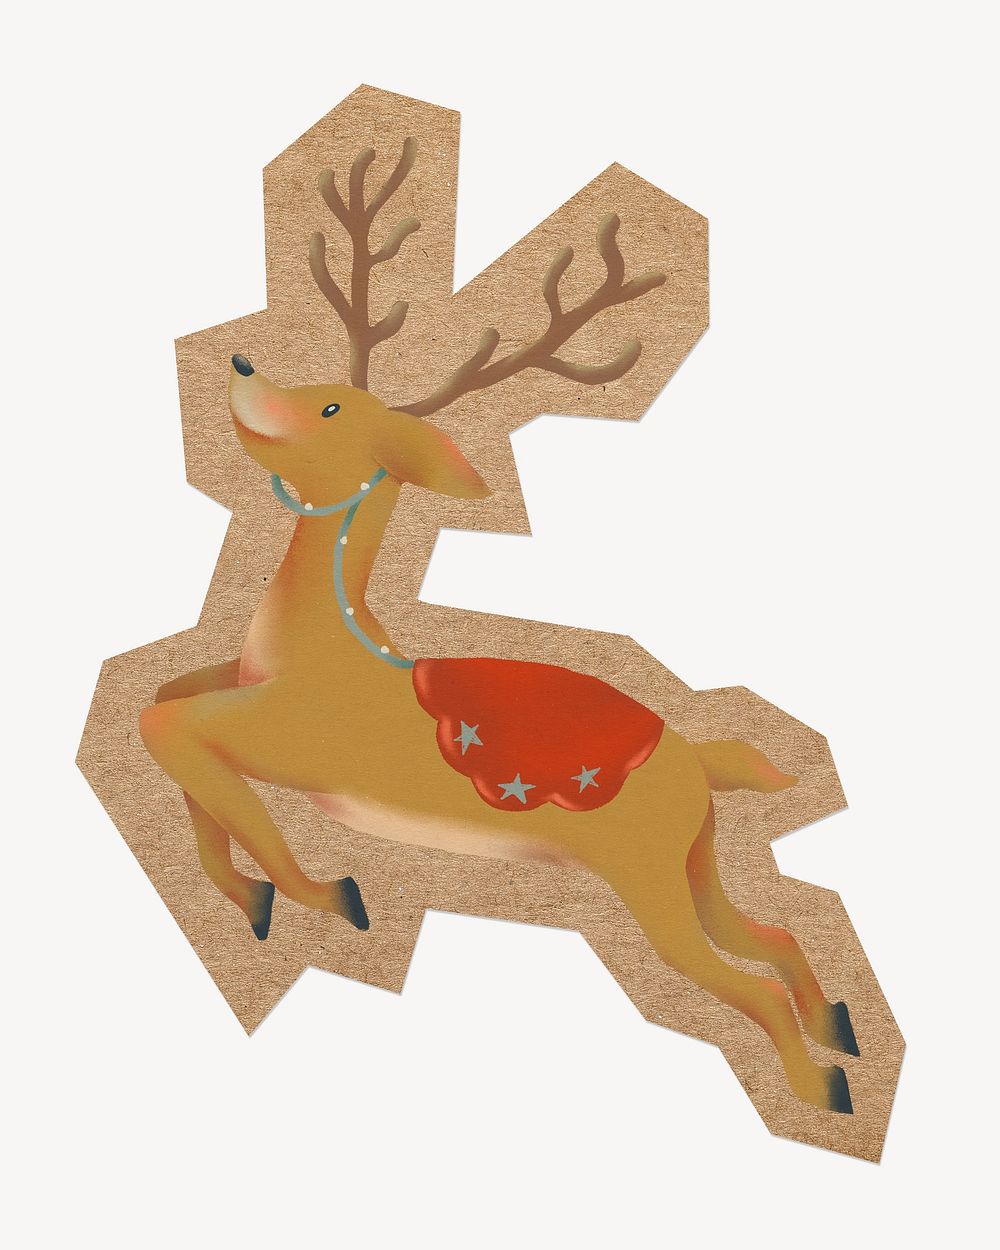 Reindeer illustration, cut out paper element